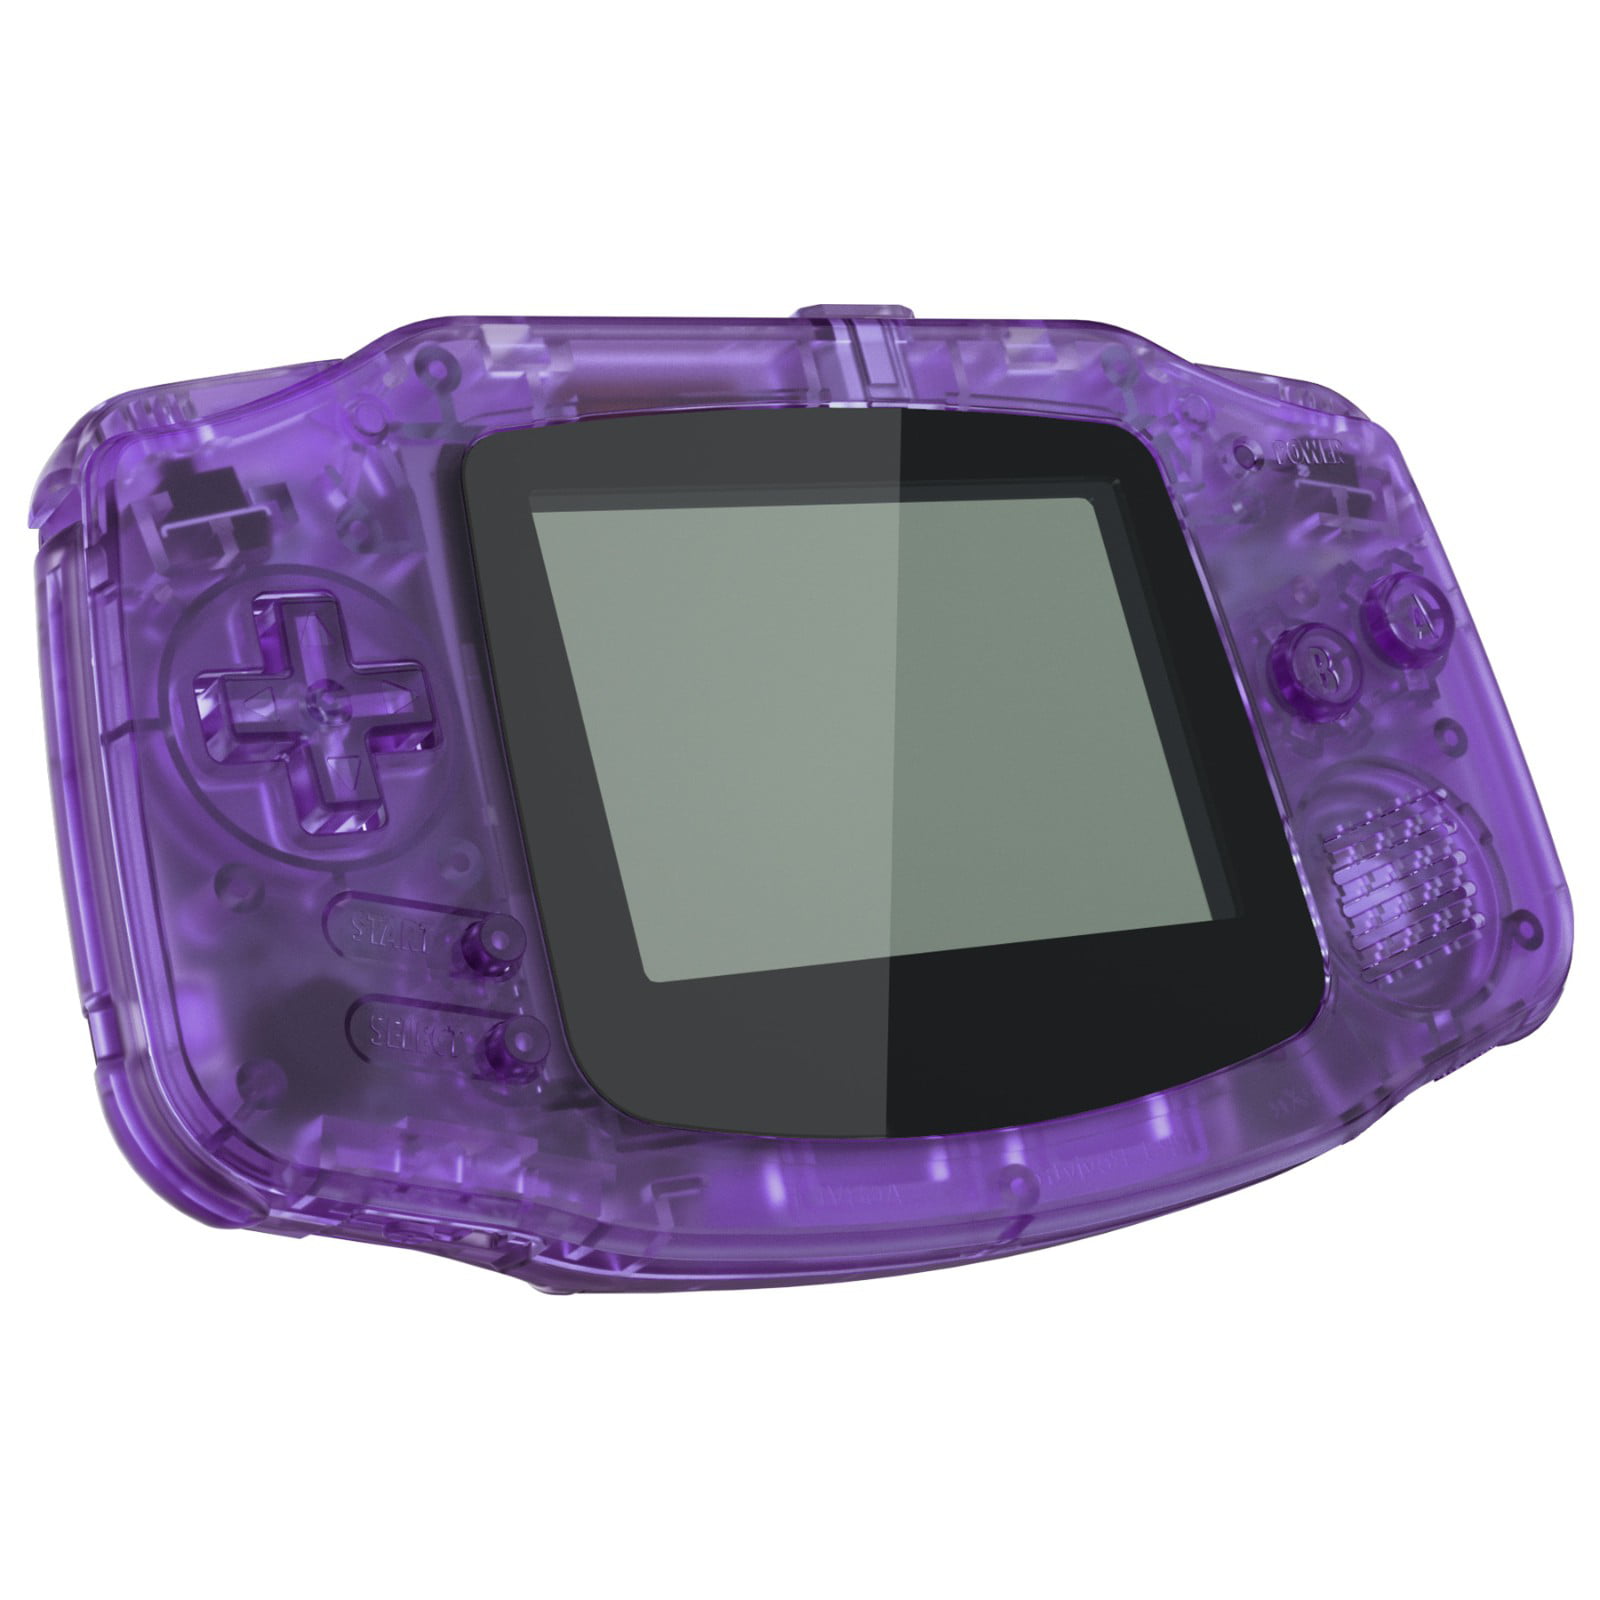 Nintendo Gameboy Advance Modded Console, Translucent Purple Edition. IPS  V3, USB C, Audio Enhanced Pro Build To Order W/ Custom Buttons